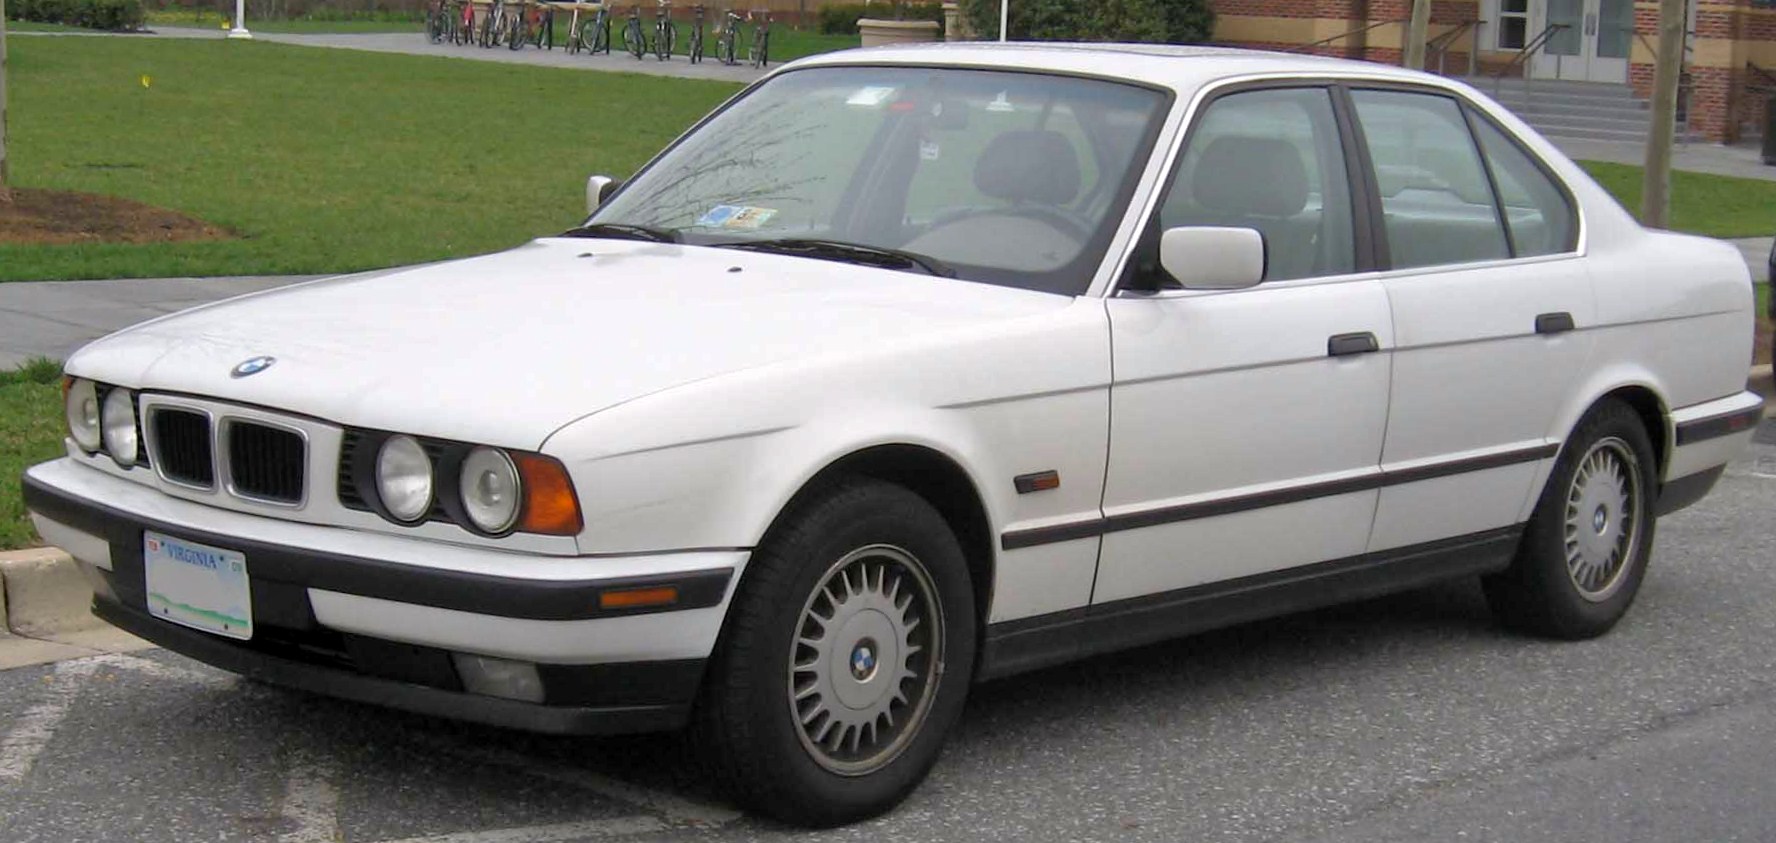 File:BMW 525i.jpg